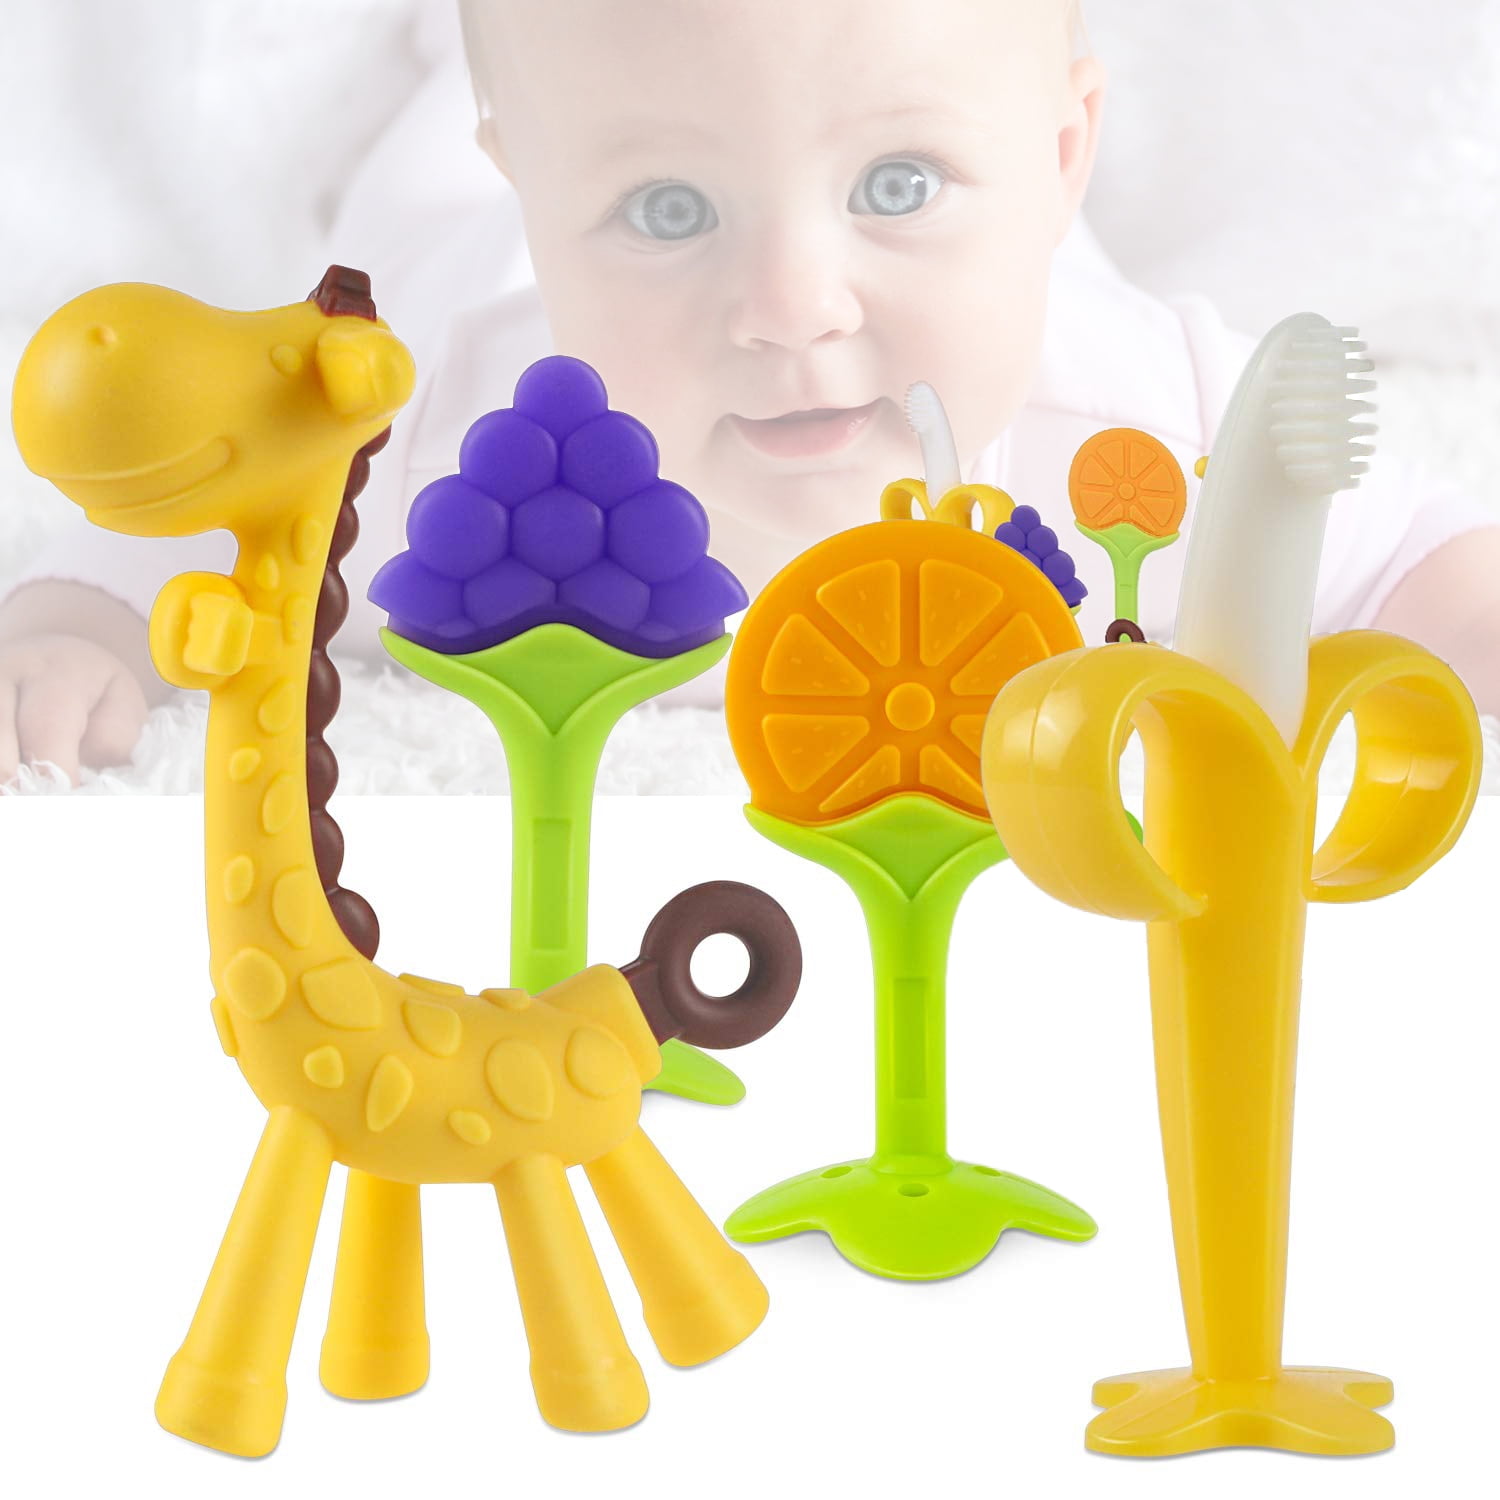 1pc Teether Educational Teething Toy Toddler BabyTeeth Training Dental Care New 